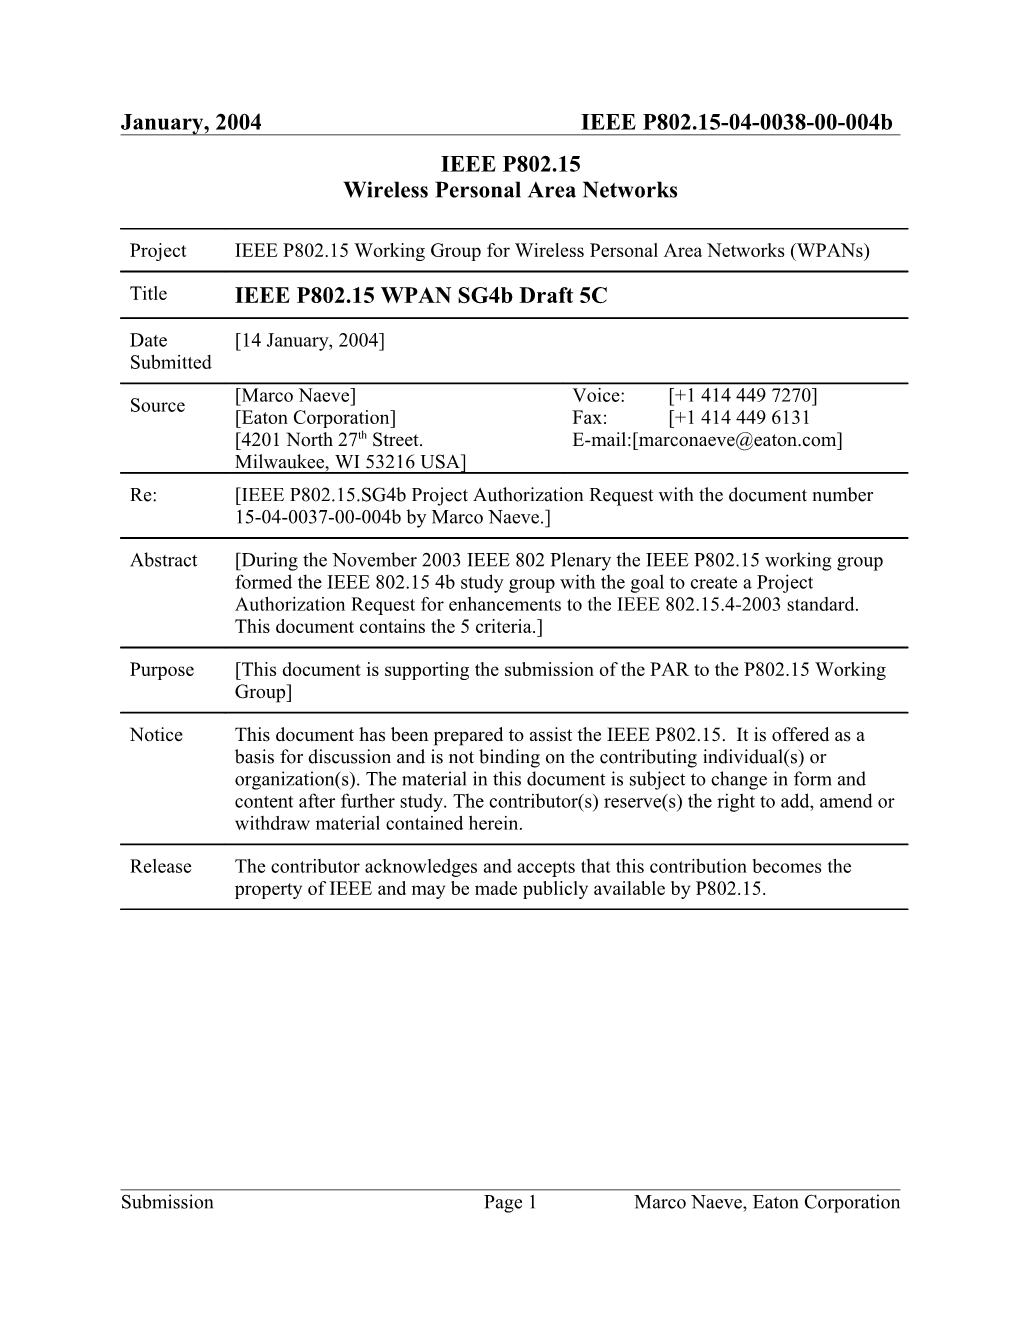 IEEE P802.15 WPAN Sg4b Draft 5C